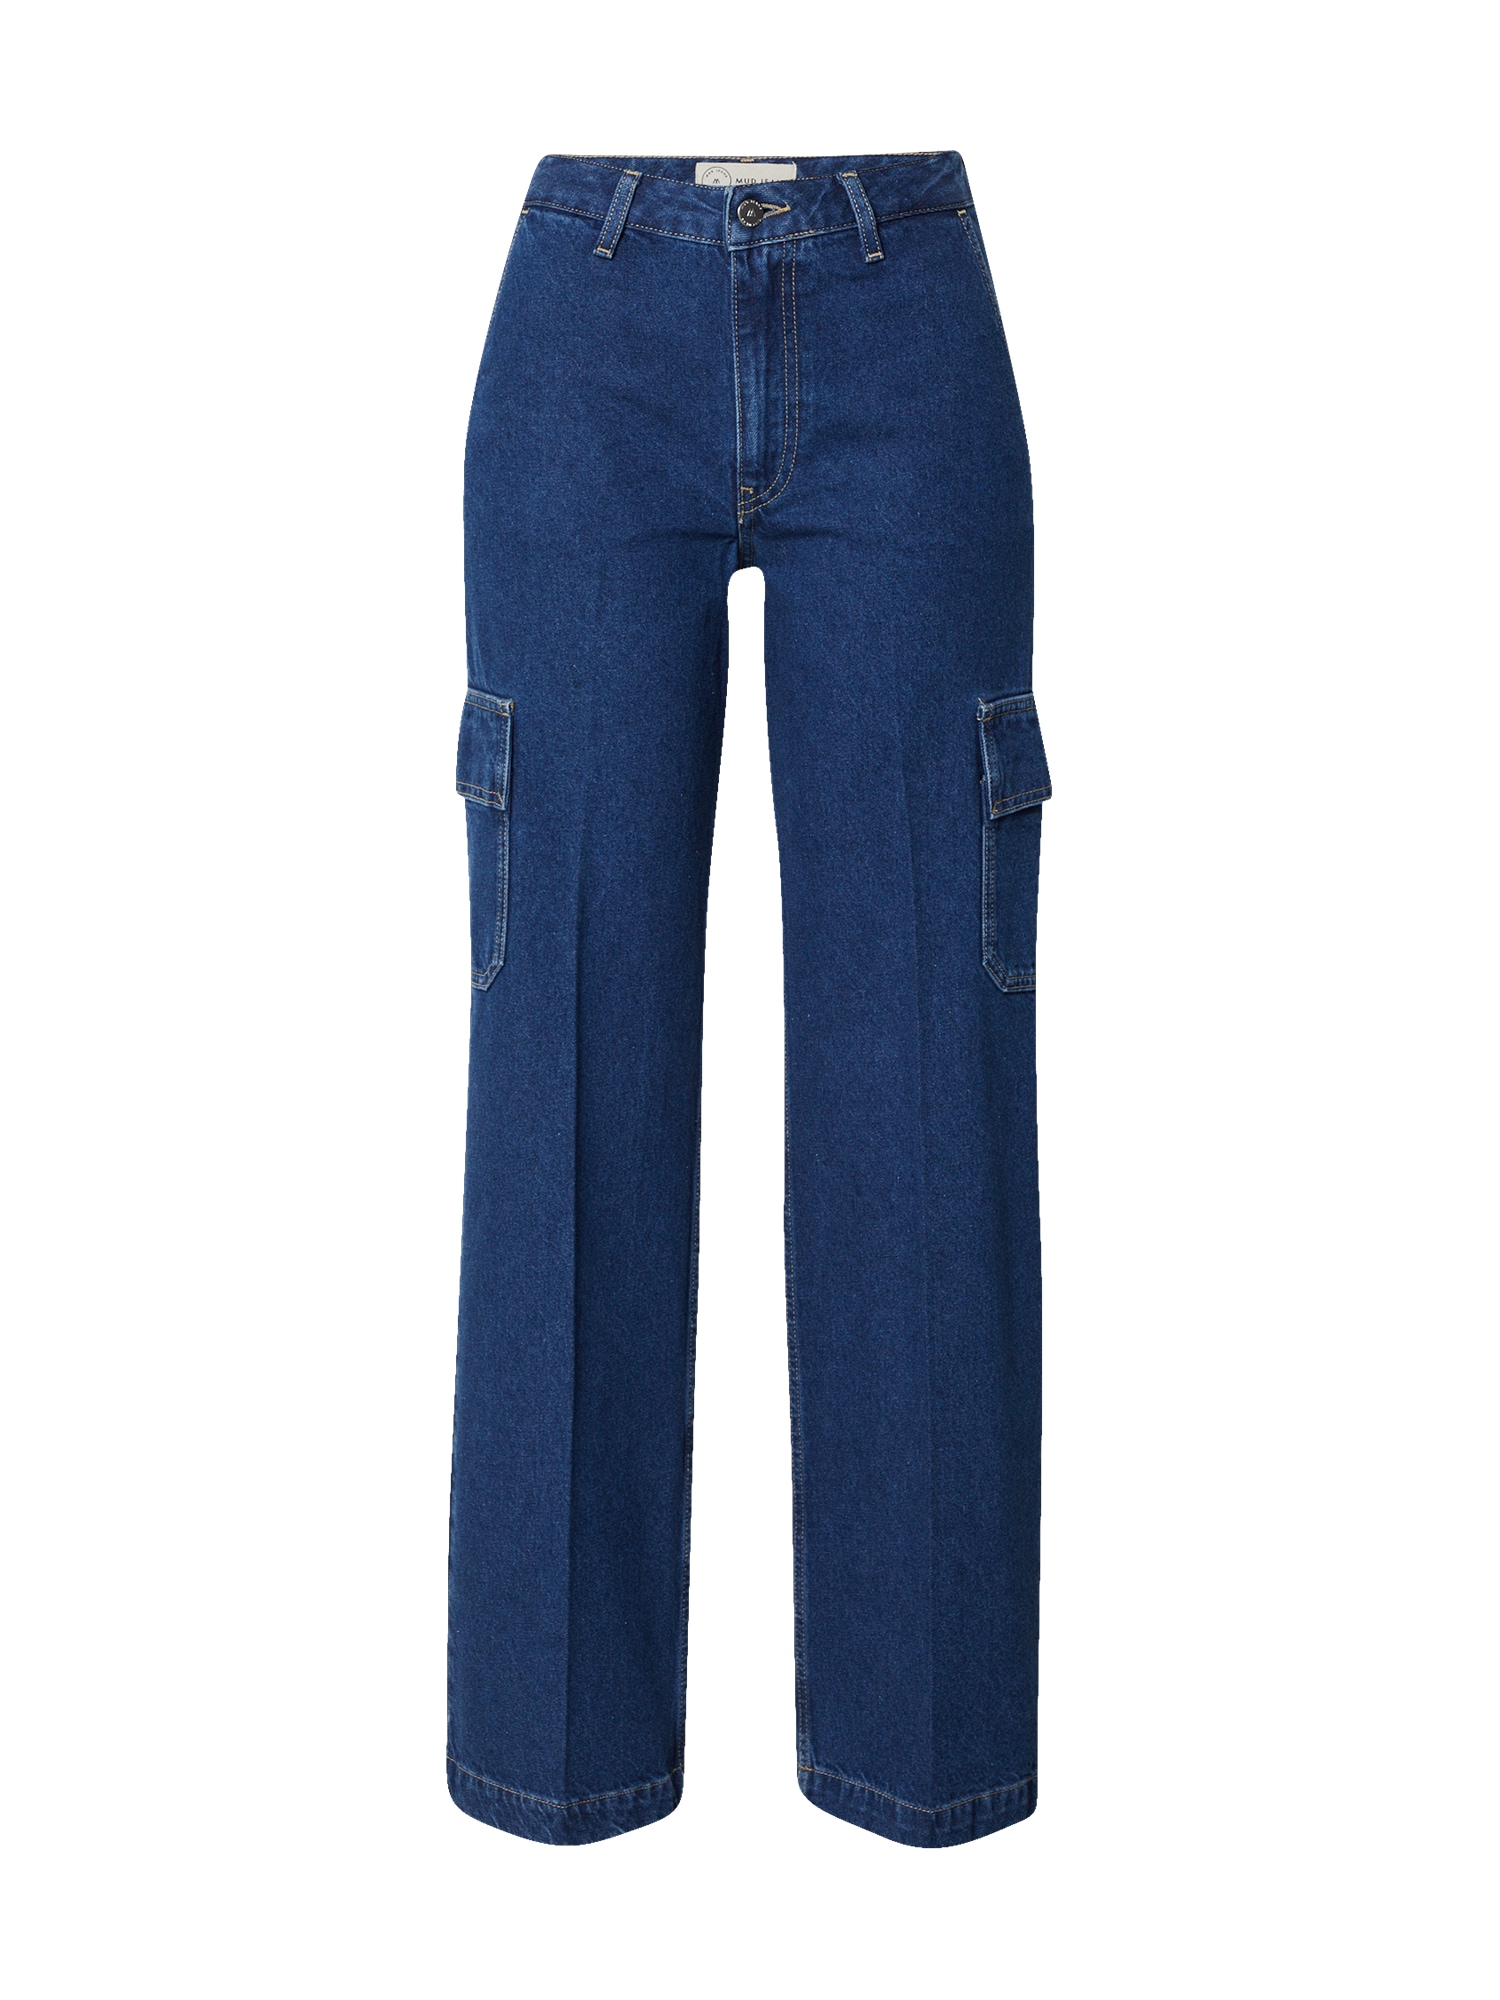 Rifľové kapsáče Wilma Works modrá denim MUD Jeans